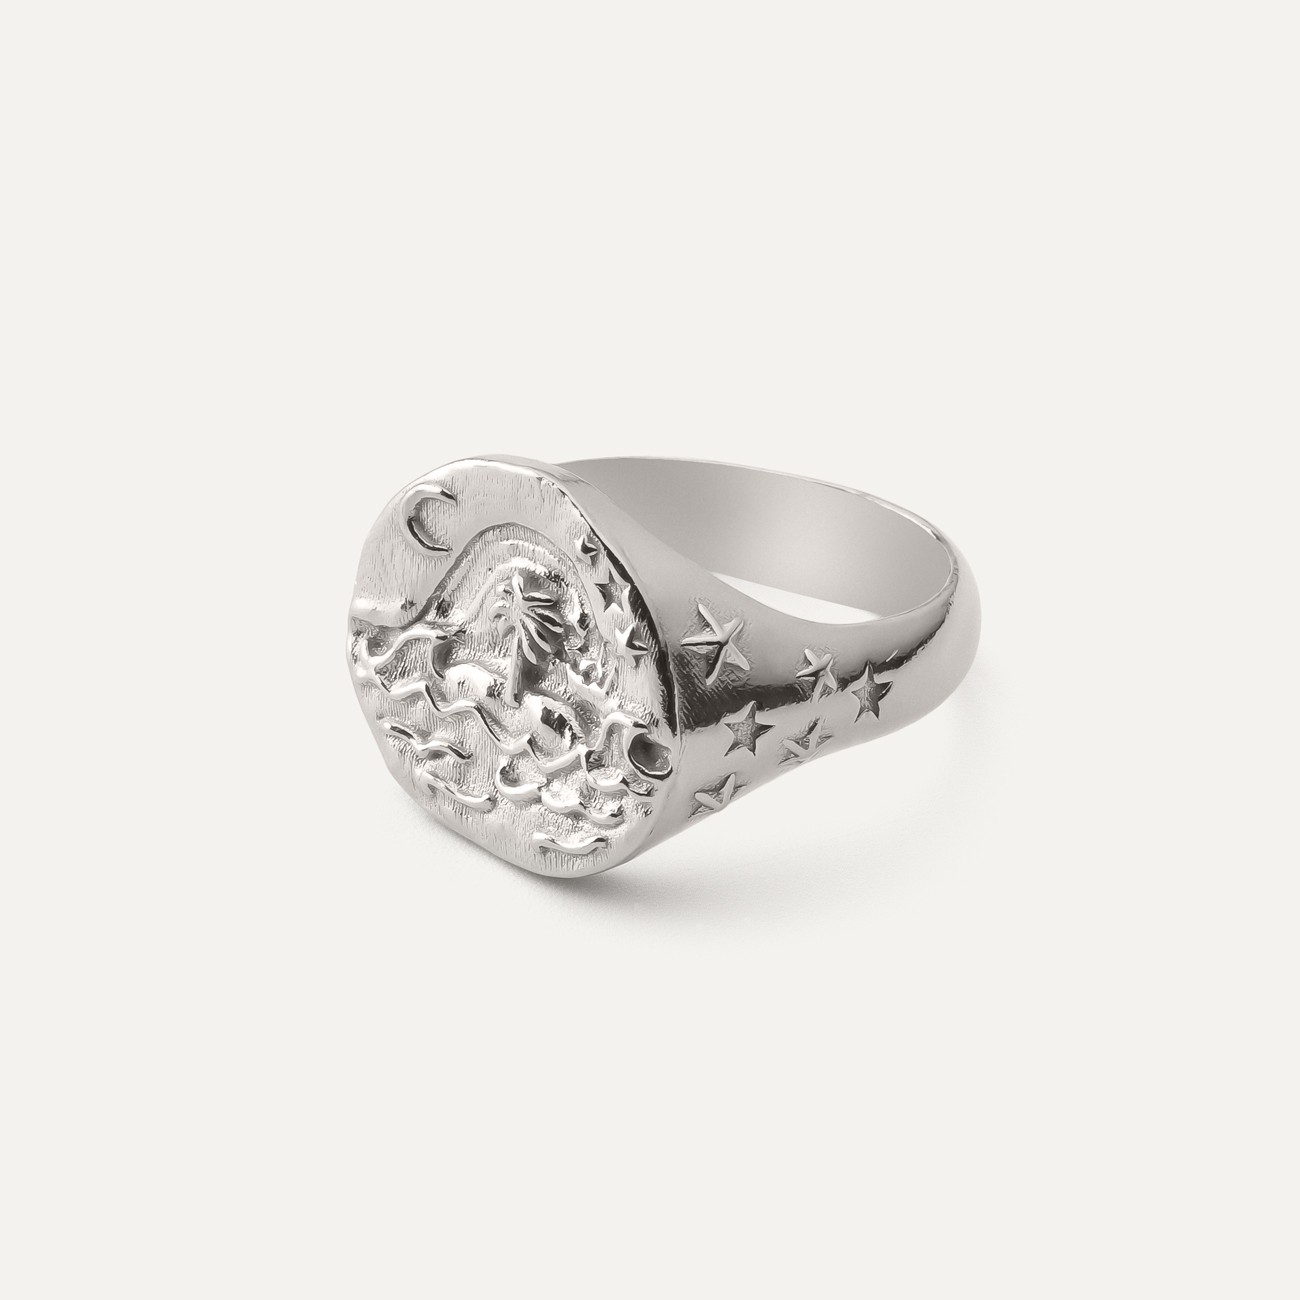 Sea signet ring, 925 silver